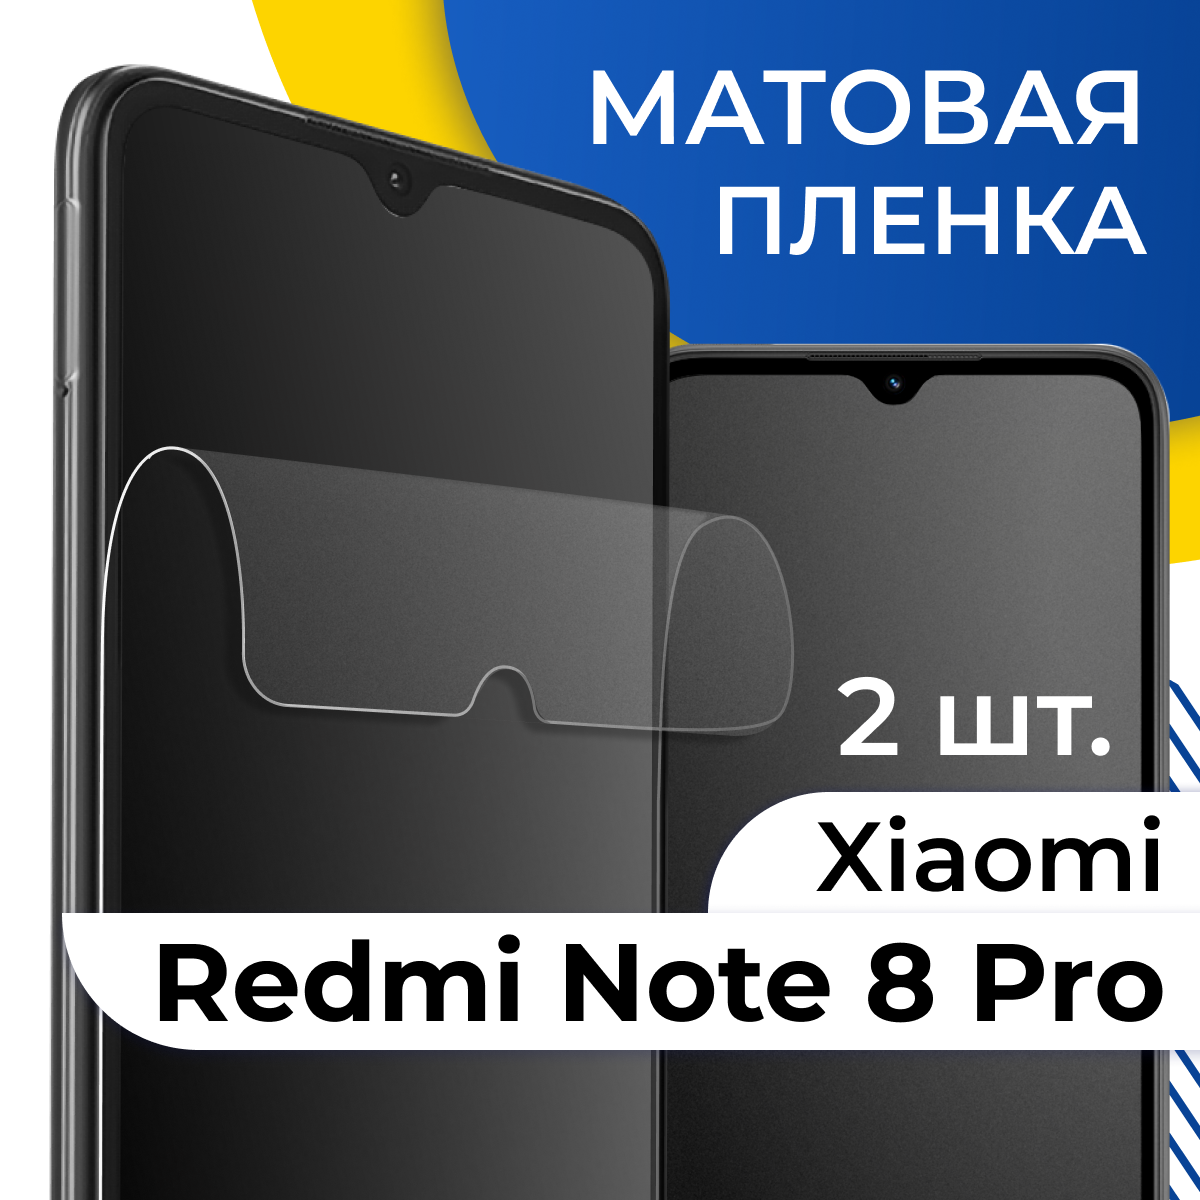 Матовая гидрогелевая пленка для телефона Xiaomi Redmi Note 8 Pro / Самовосстанавливающаяся защитная пленка на смартфон Сяоми Редми Нот 8 Про